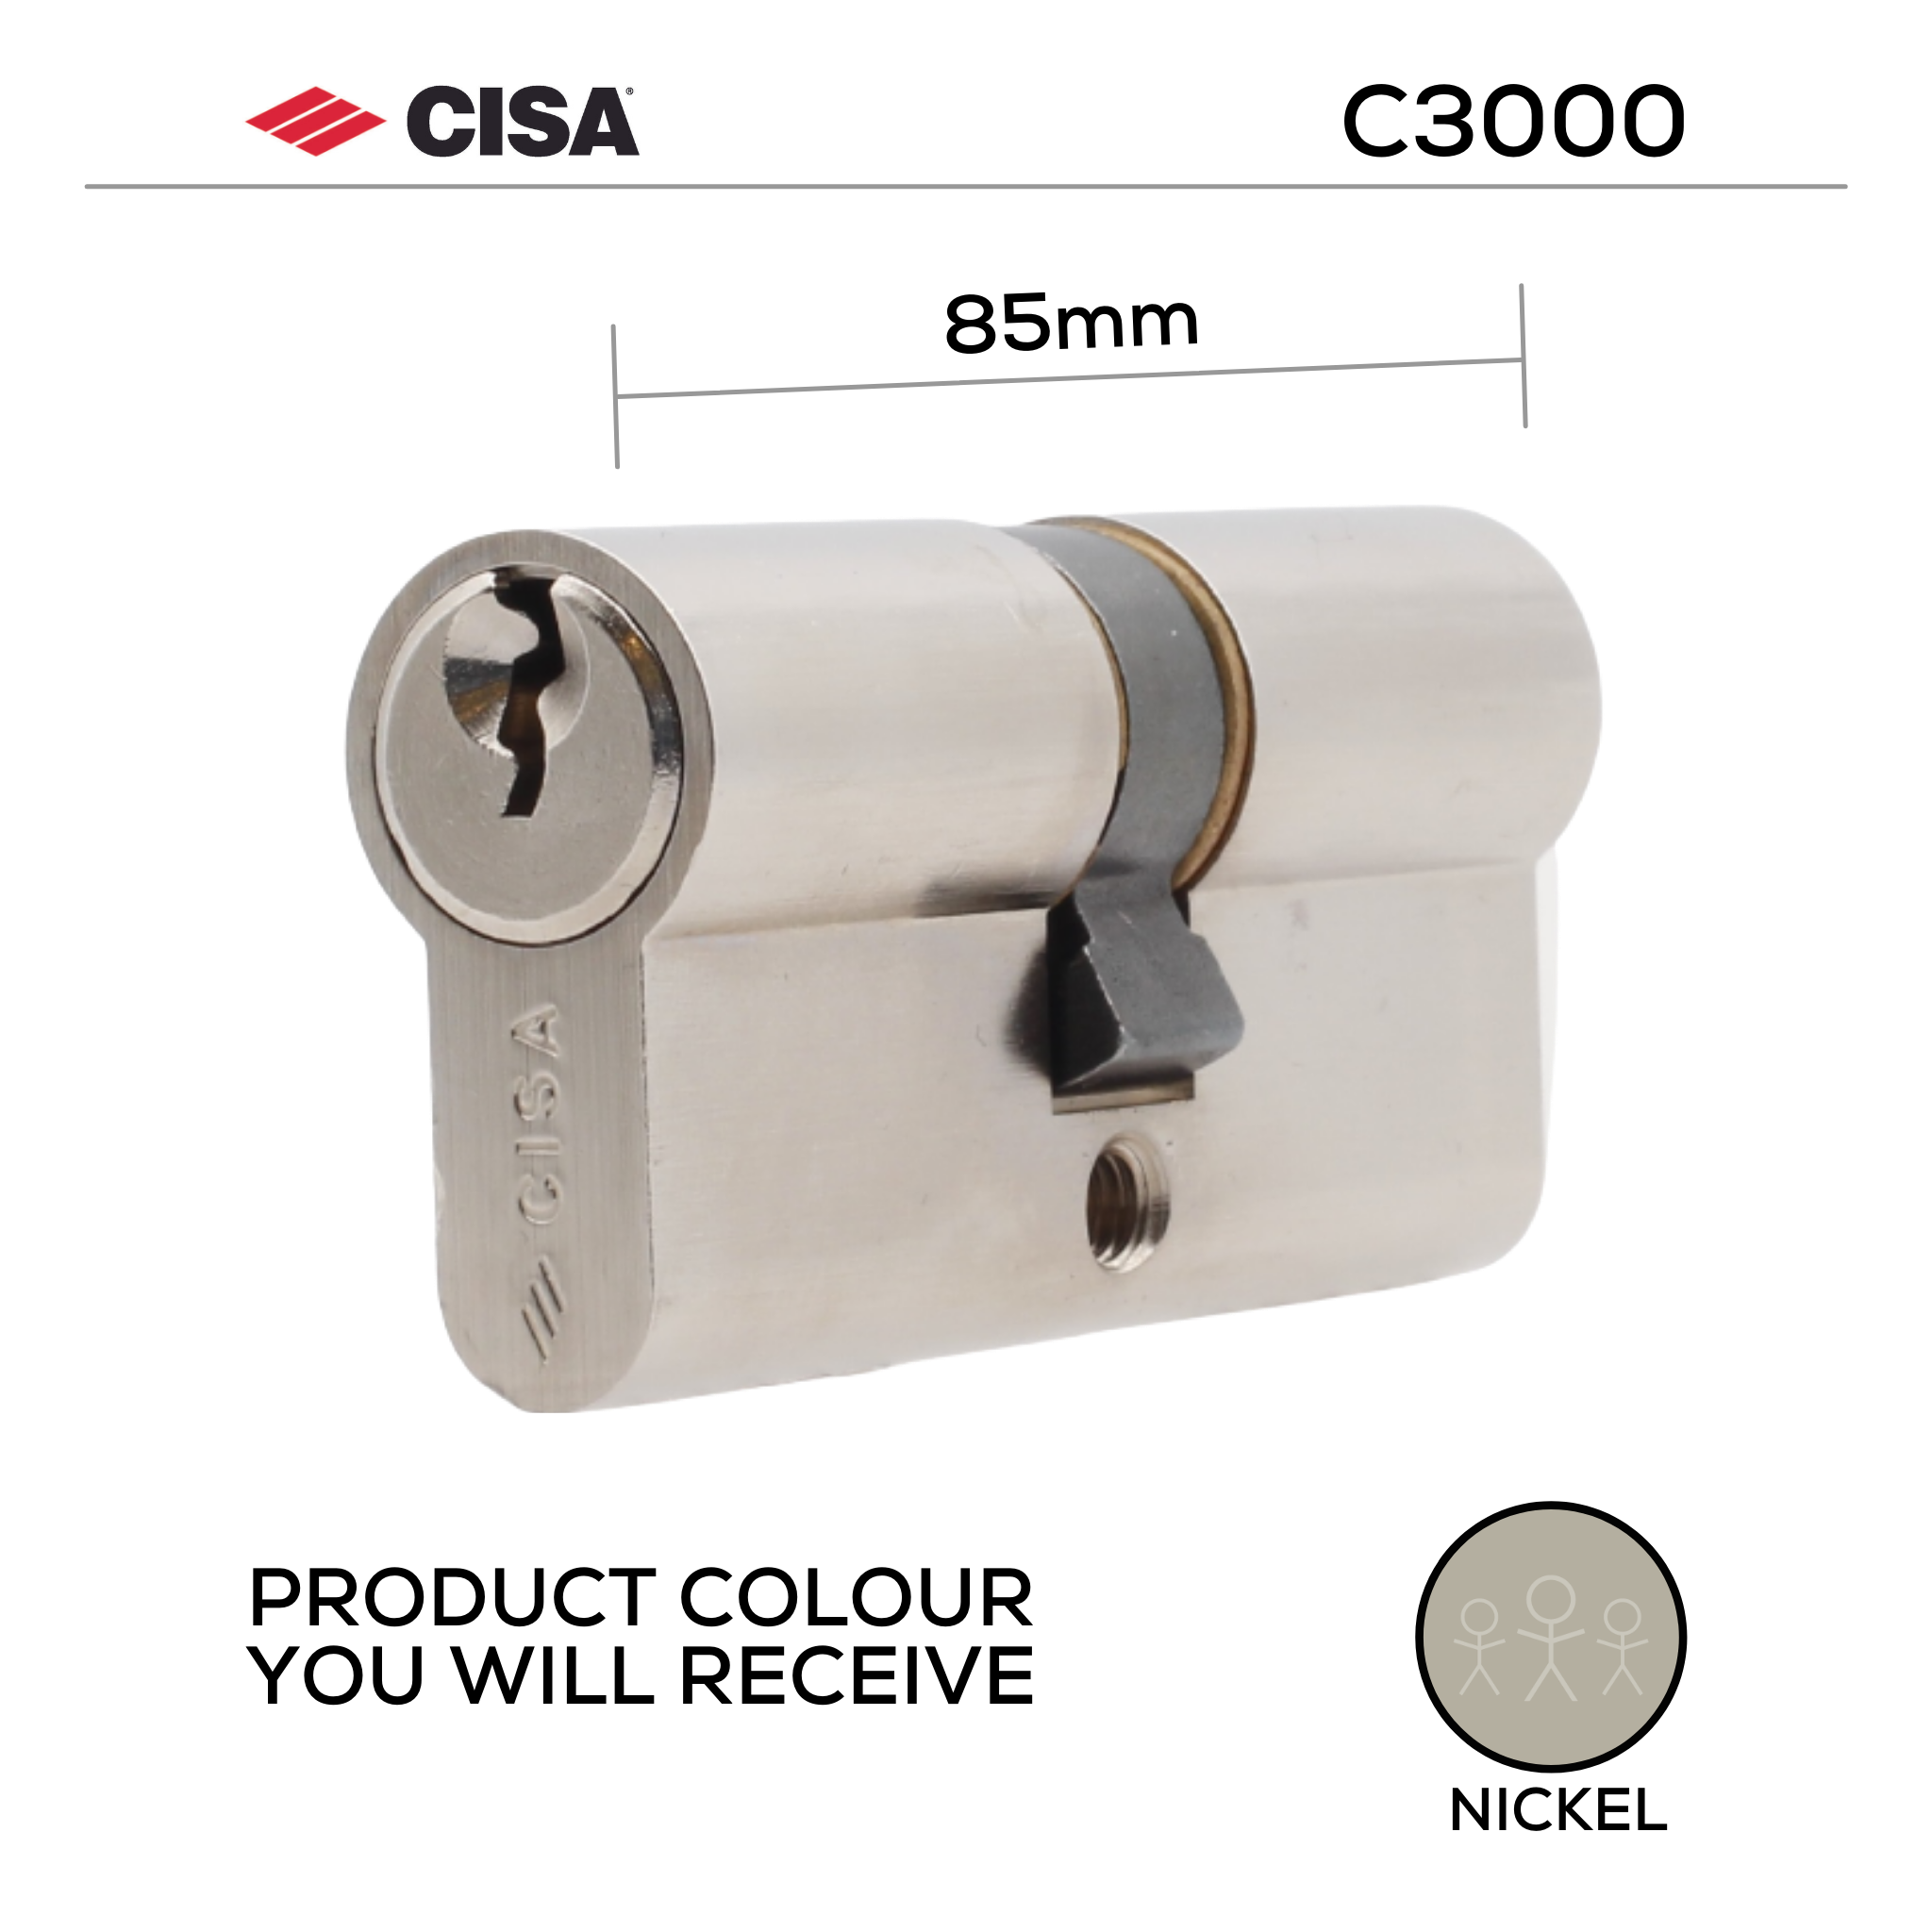 0N310-46-12-KD, 85mm - 42.5/42.5, Double Cylinder, C3000, Key to Key, Keyed to Differ (Standard), 3 Keys, 6 Pin, Nickel, CISA